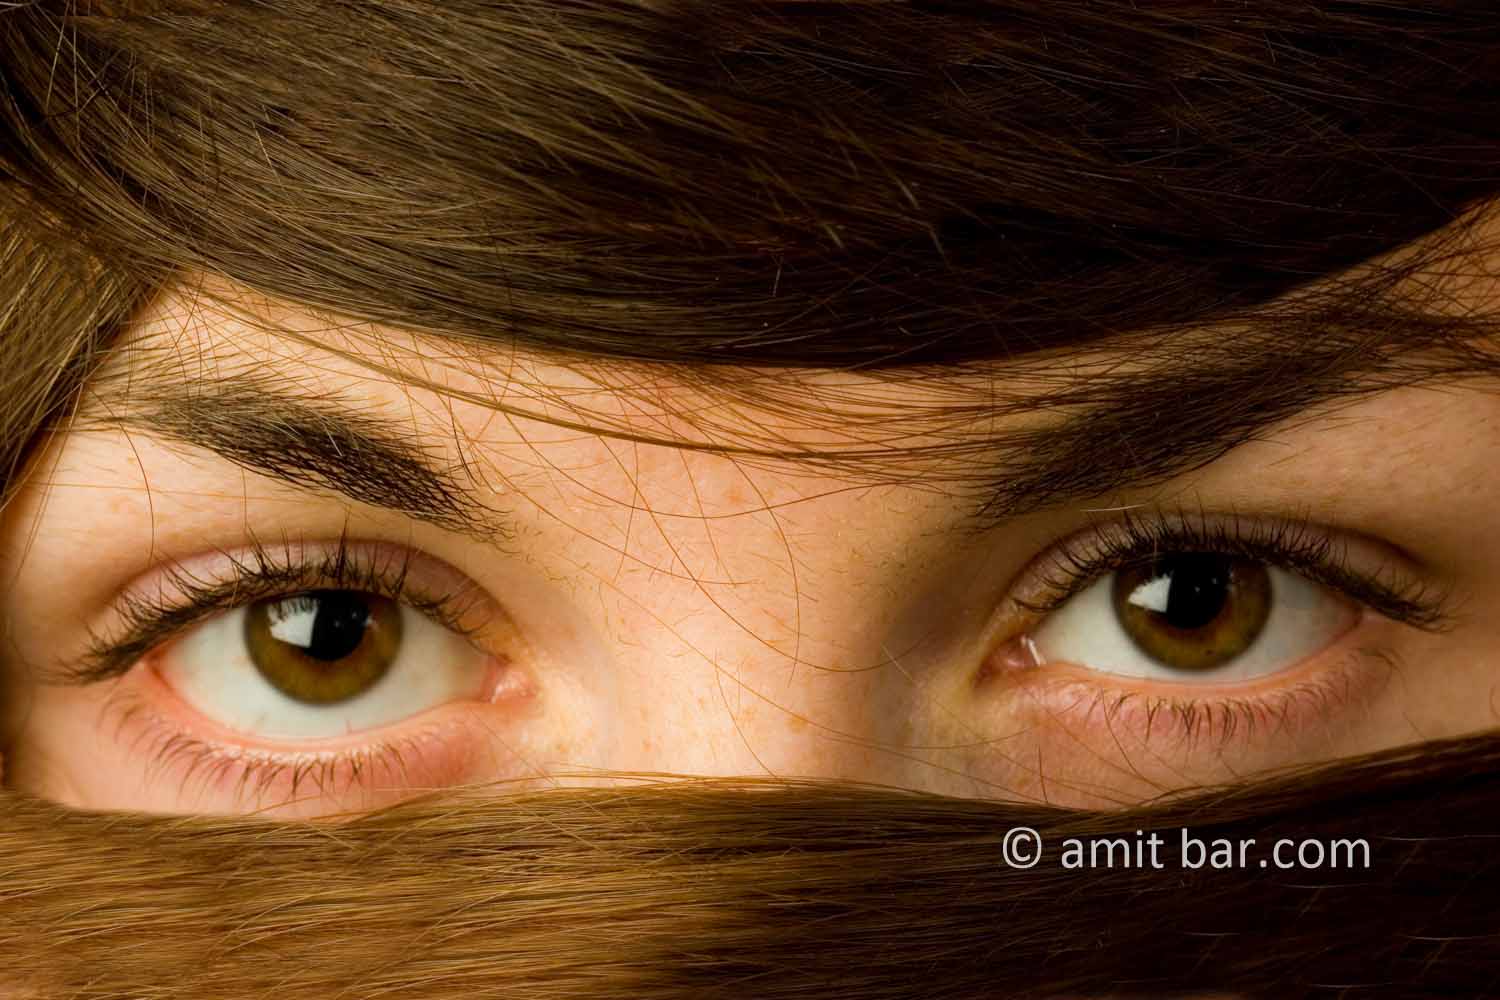 Eyes, hair and scarf I: eyes and hair